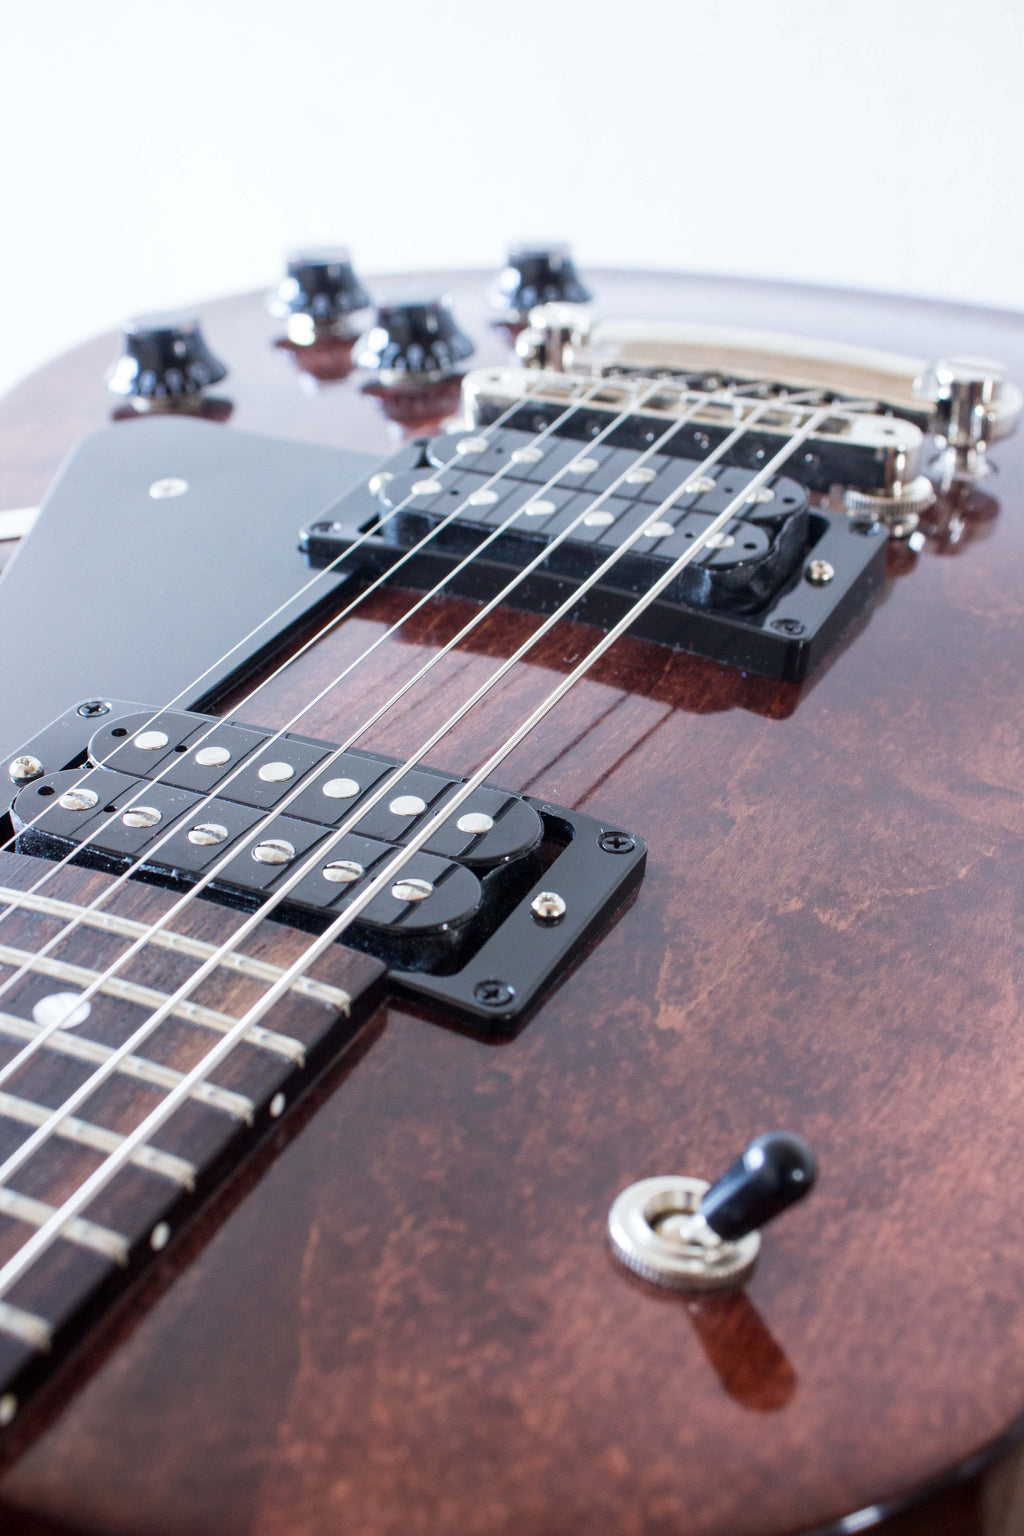 Gibson Les Paul Studio T-Series Worn Brown 2017